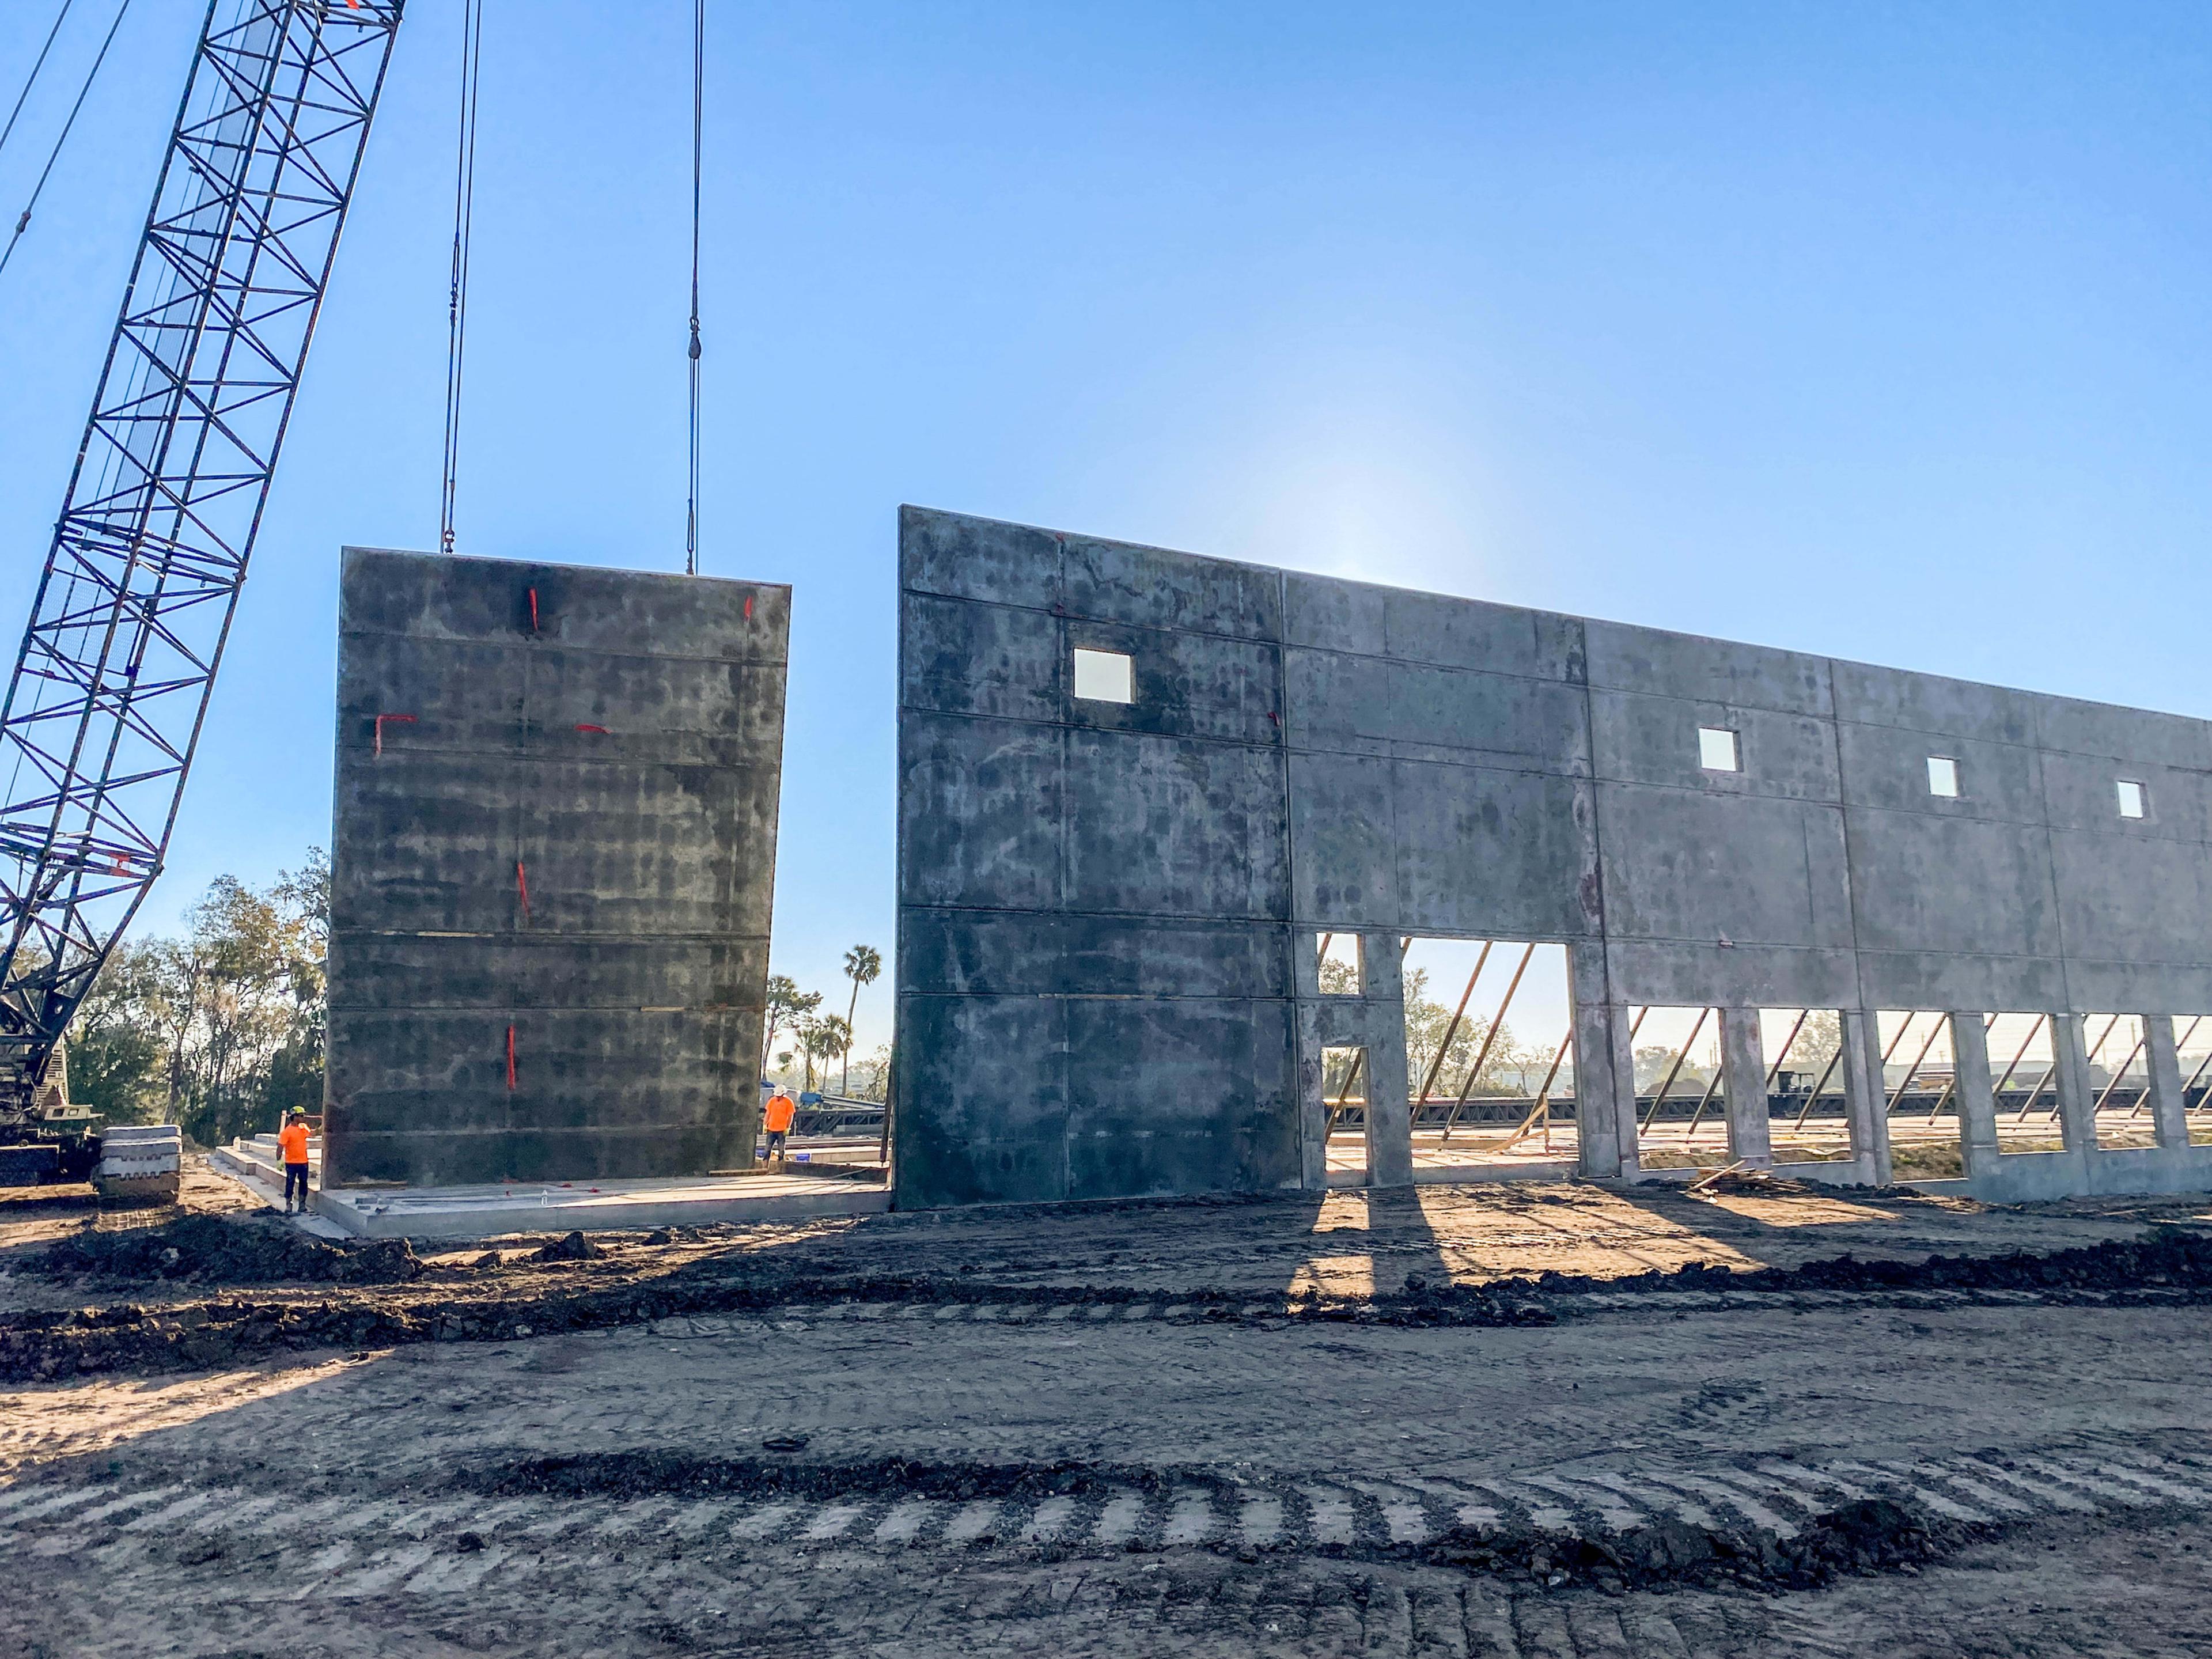 tilt-up concrete panels being assembled on a jobsite